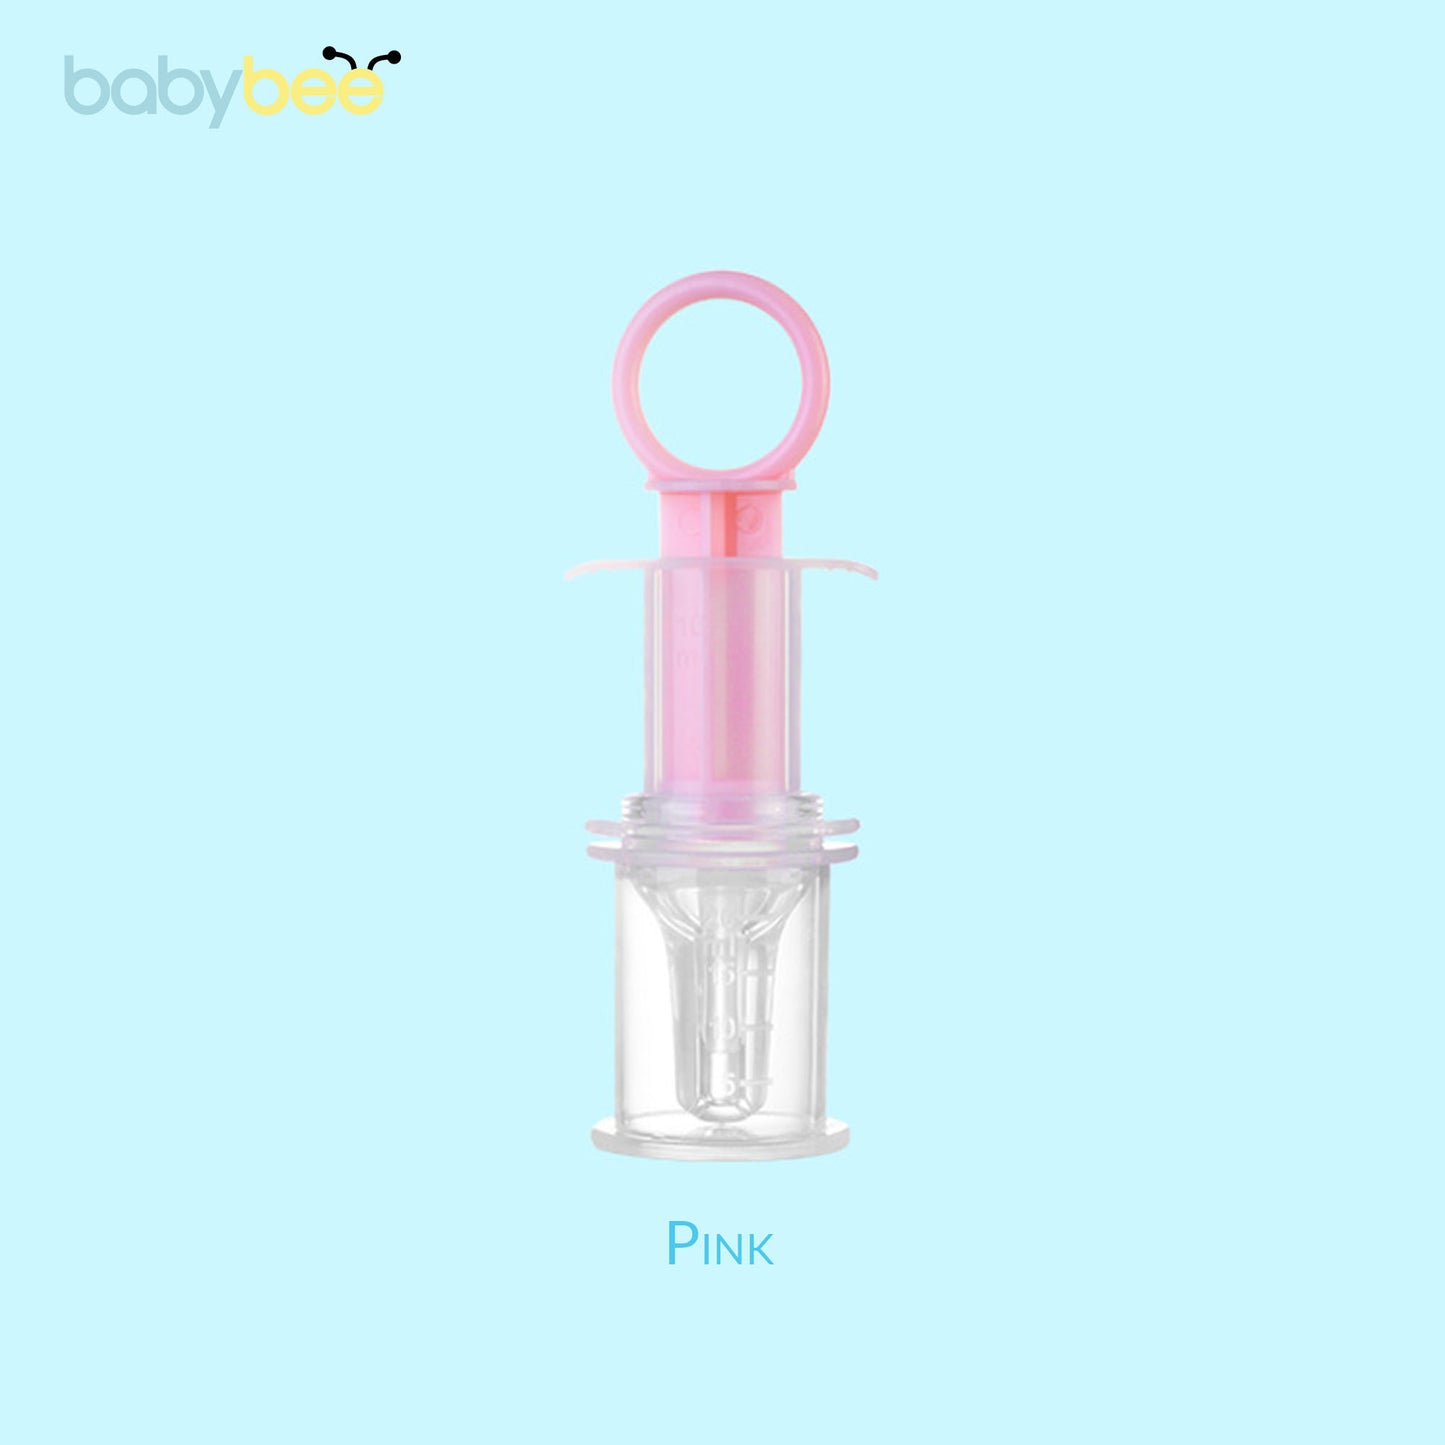 Babybee Silicone Medicine Feeder - Pink